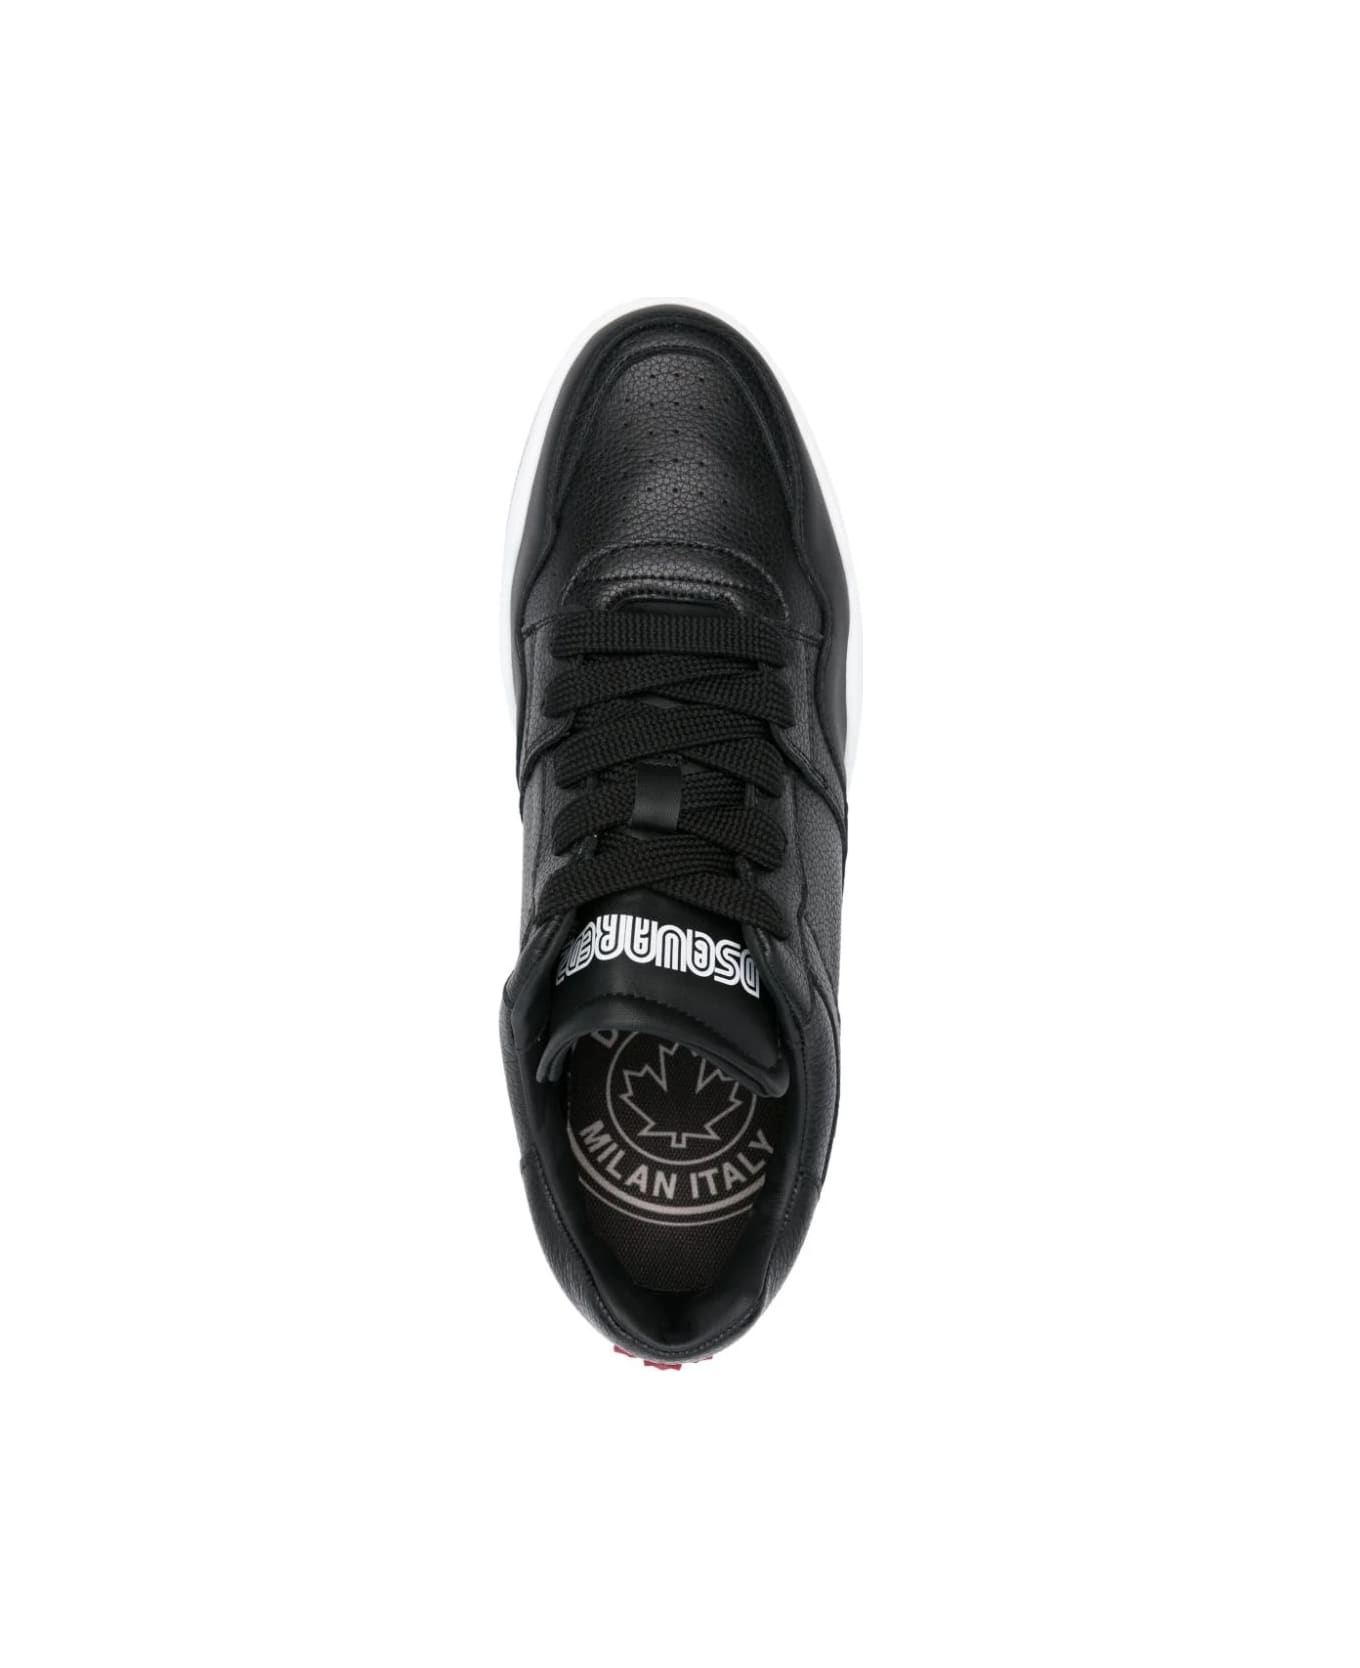 Dsquared2 Black Spiker Sneakers - Black